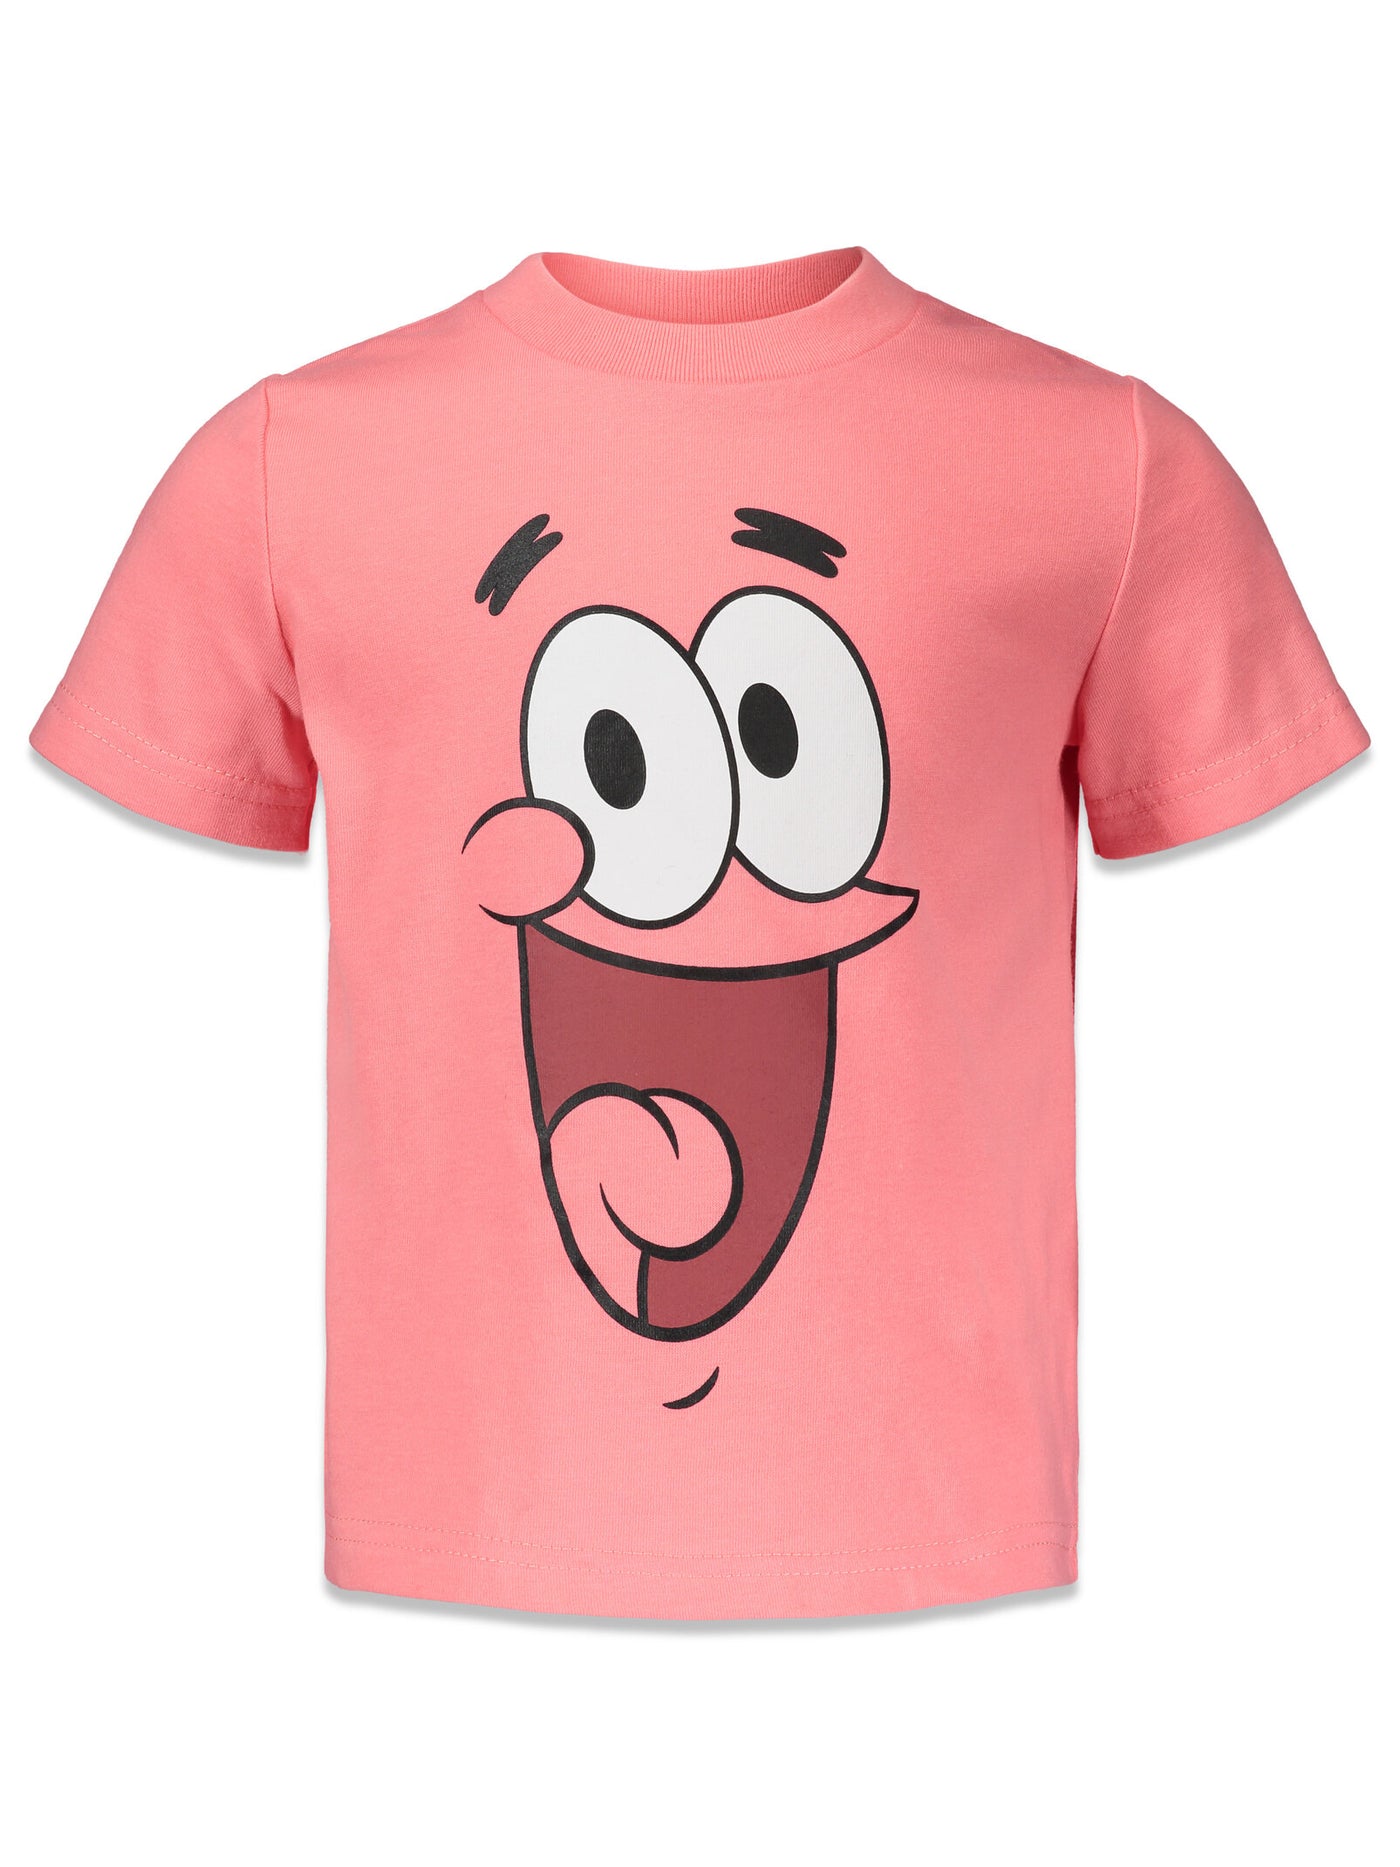 SpongeBob SquarePants 3 Pack Graphic T-Shirts